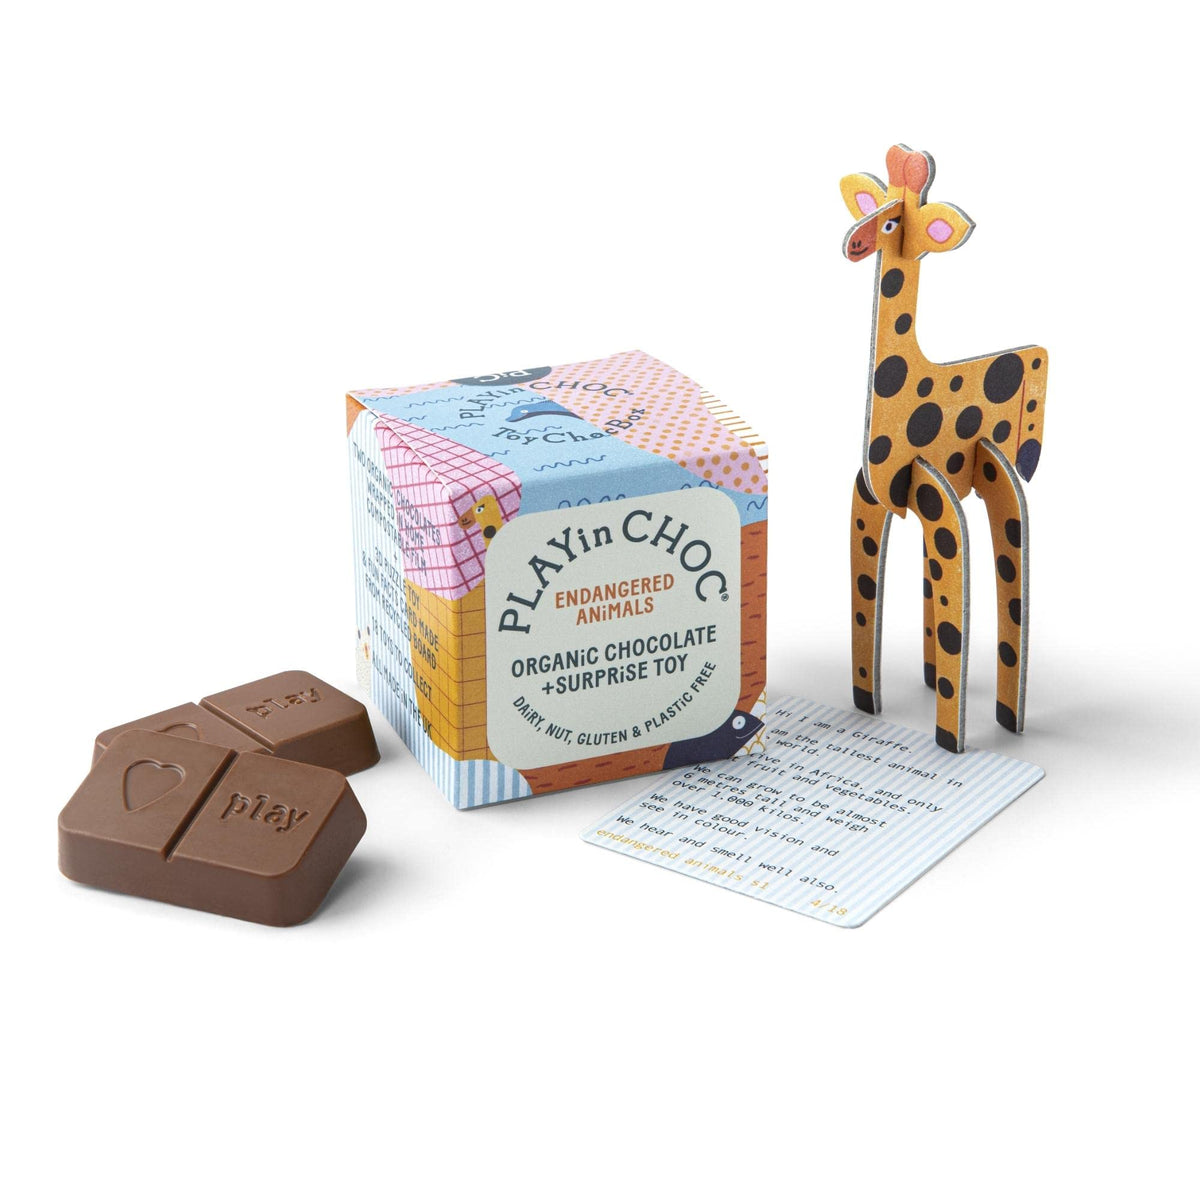 PLAYin CHOC ToyChoc Box, Organic Chocolate Gift Box for Kids With Surprise 3D Puzzle Toy, Gluten, Nut & Dairy Free Chocolate, Award Winning Vegan UK Chocolatier - Endangered Animals